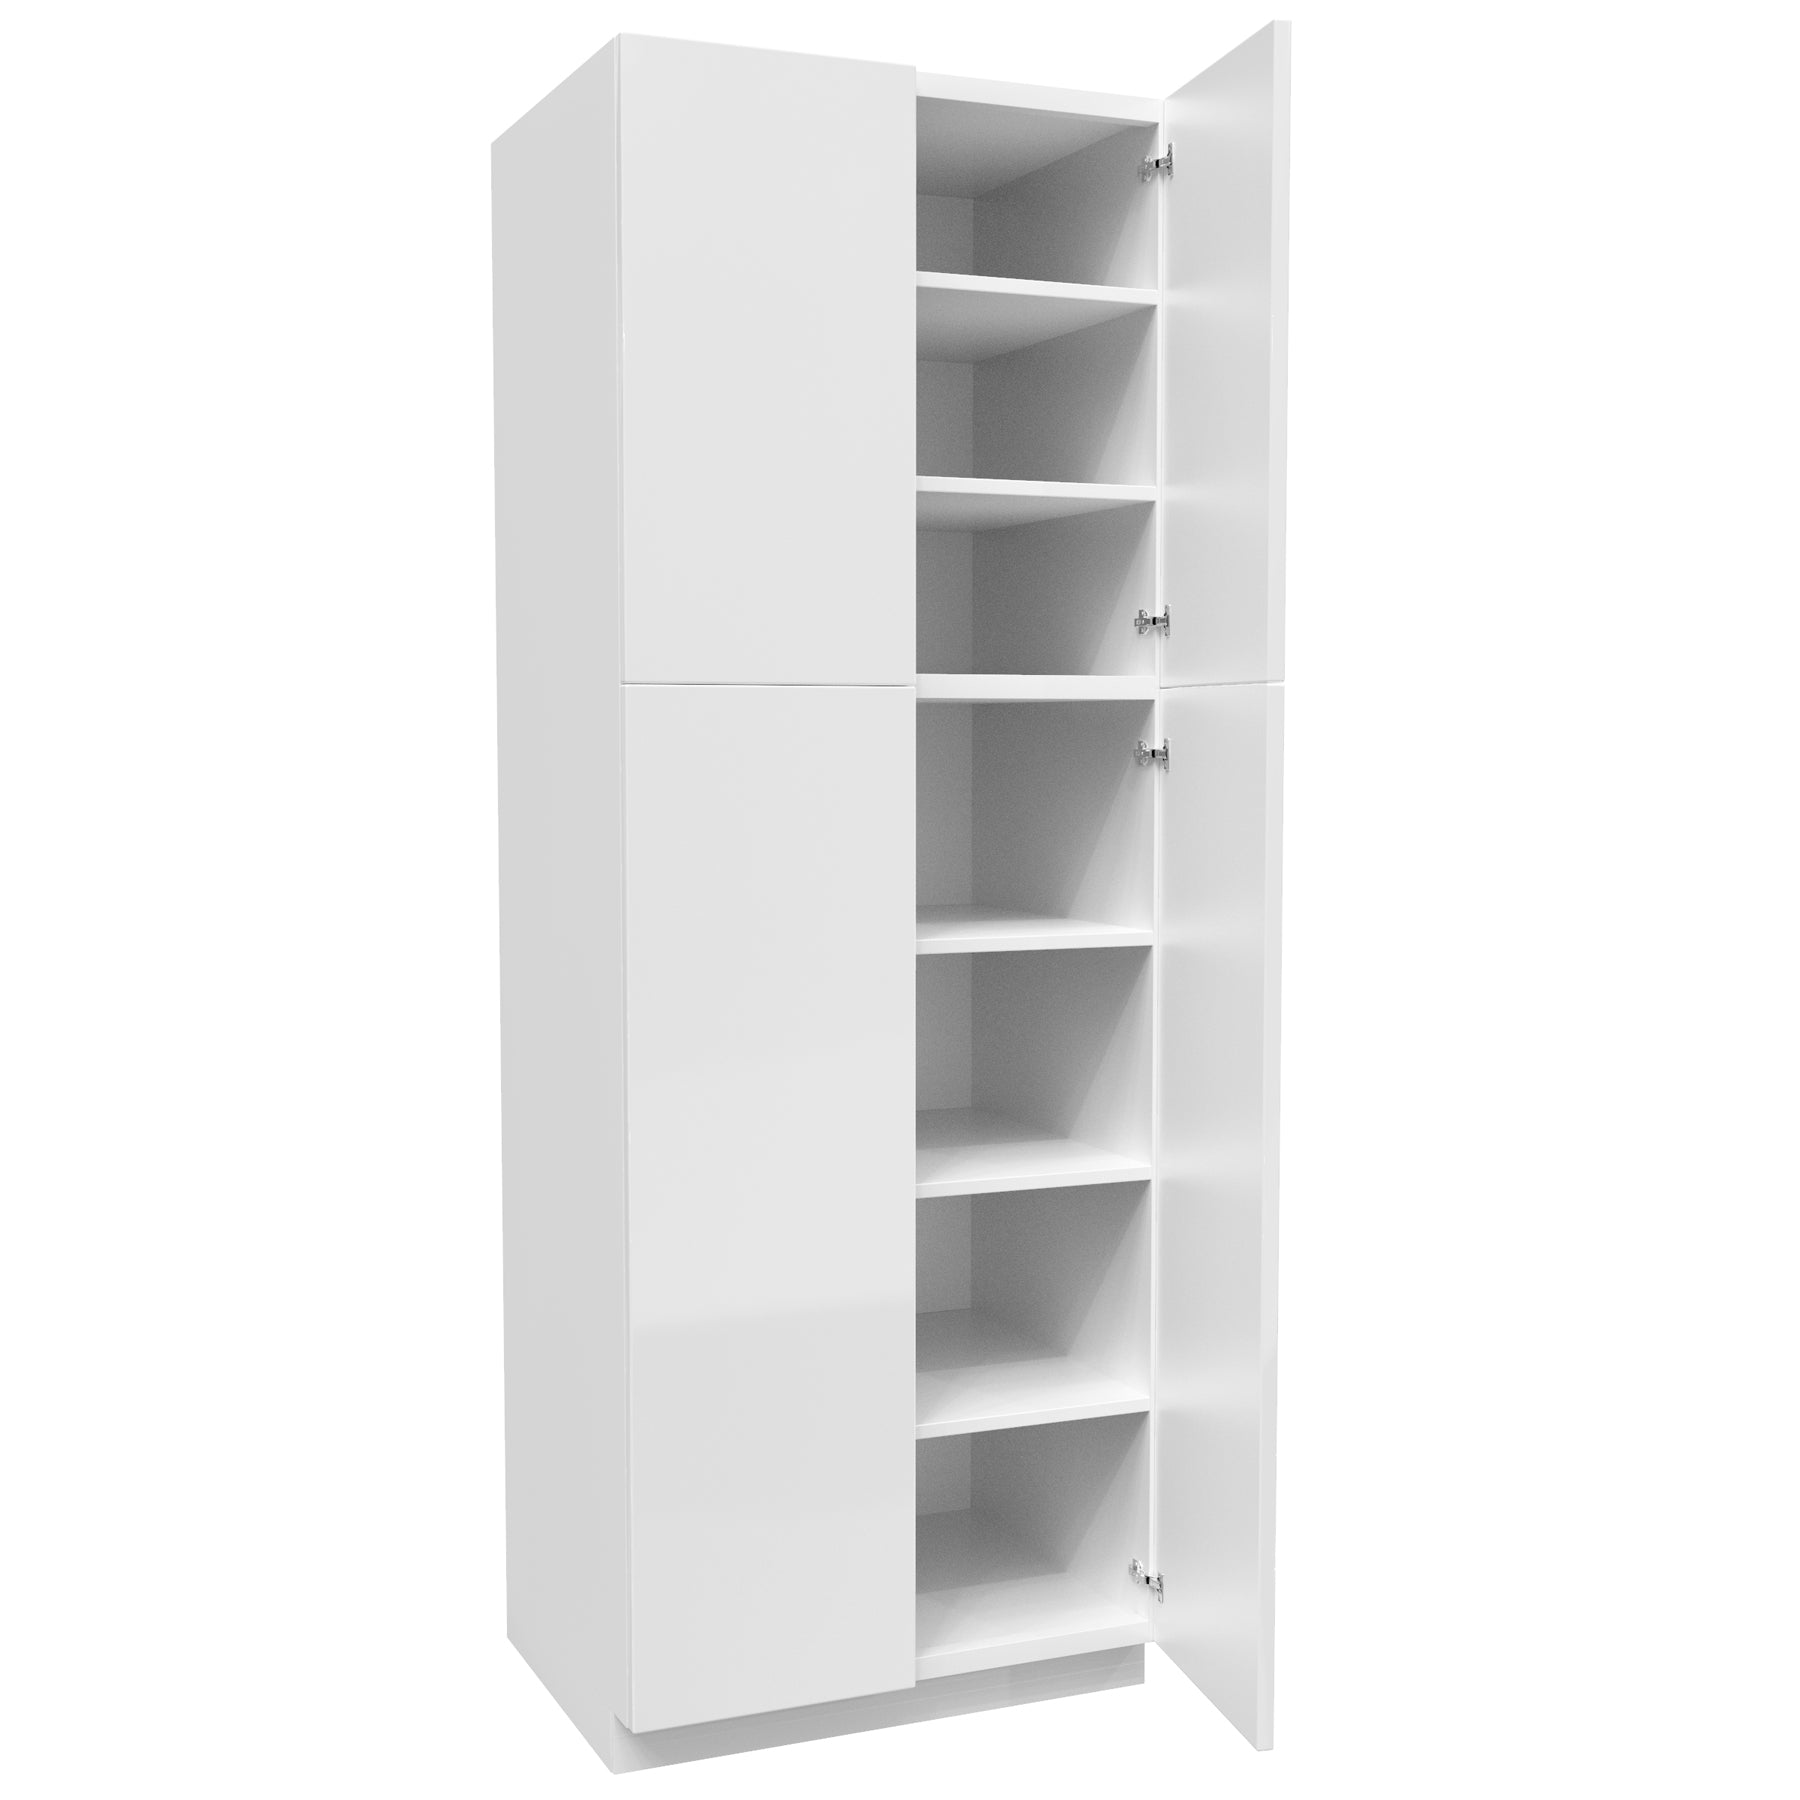 Double Door Utility Cabinet | Milano White | 30W x 84H x 24D